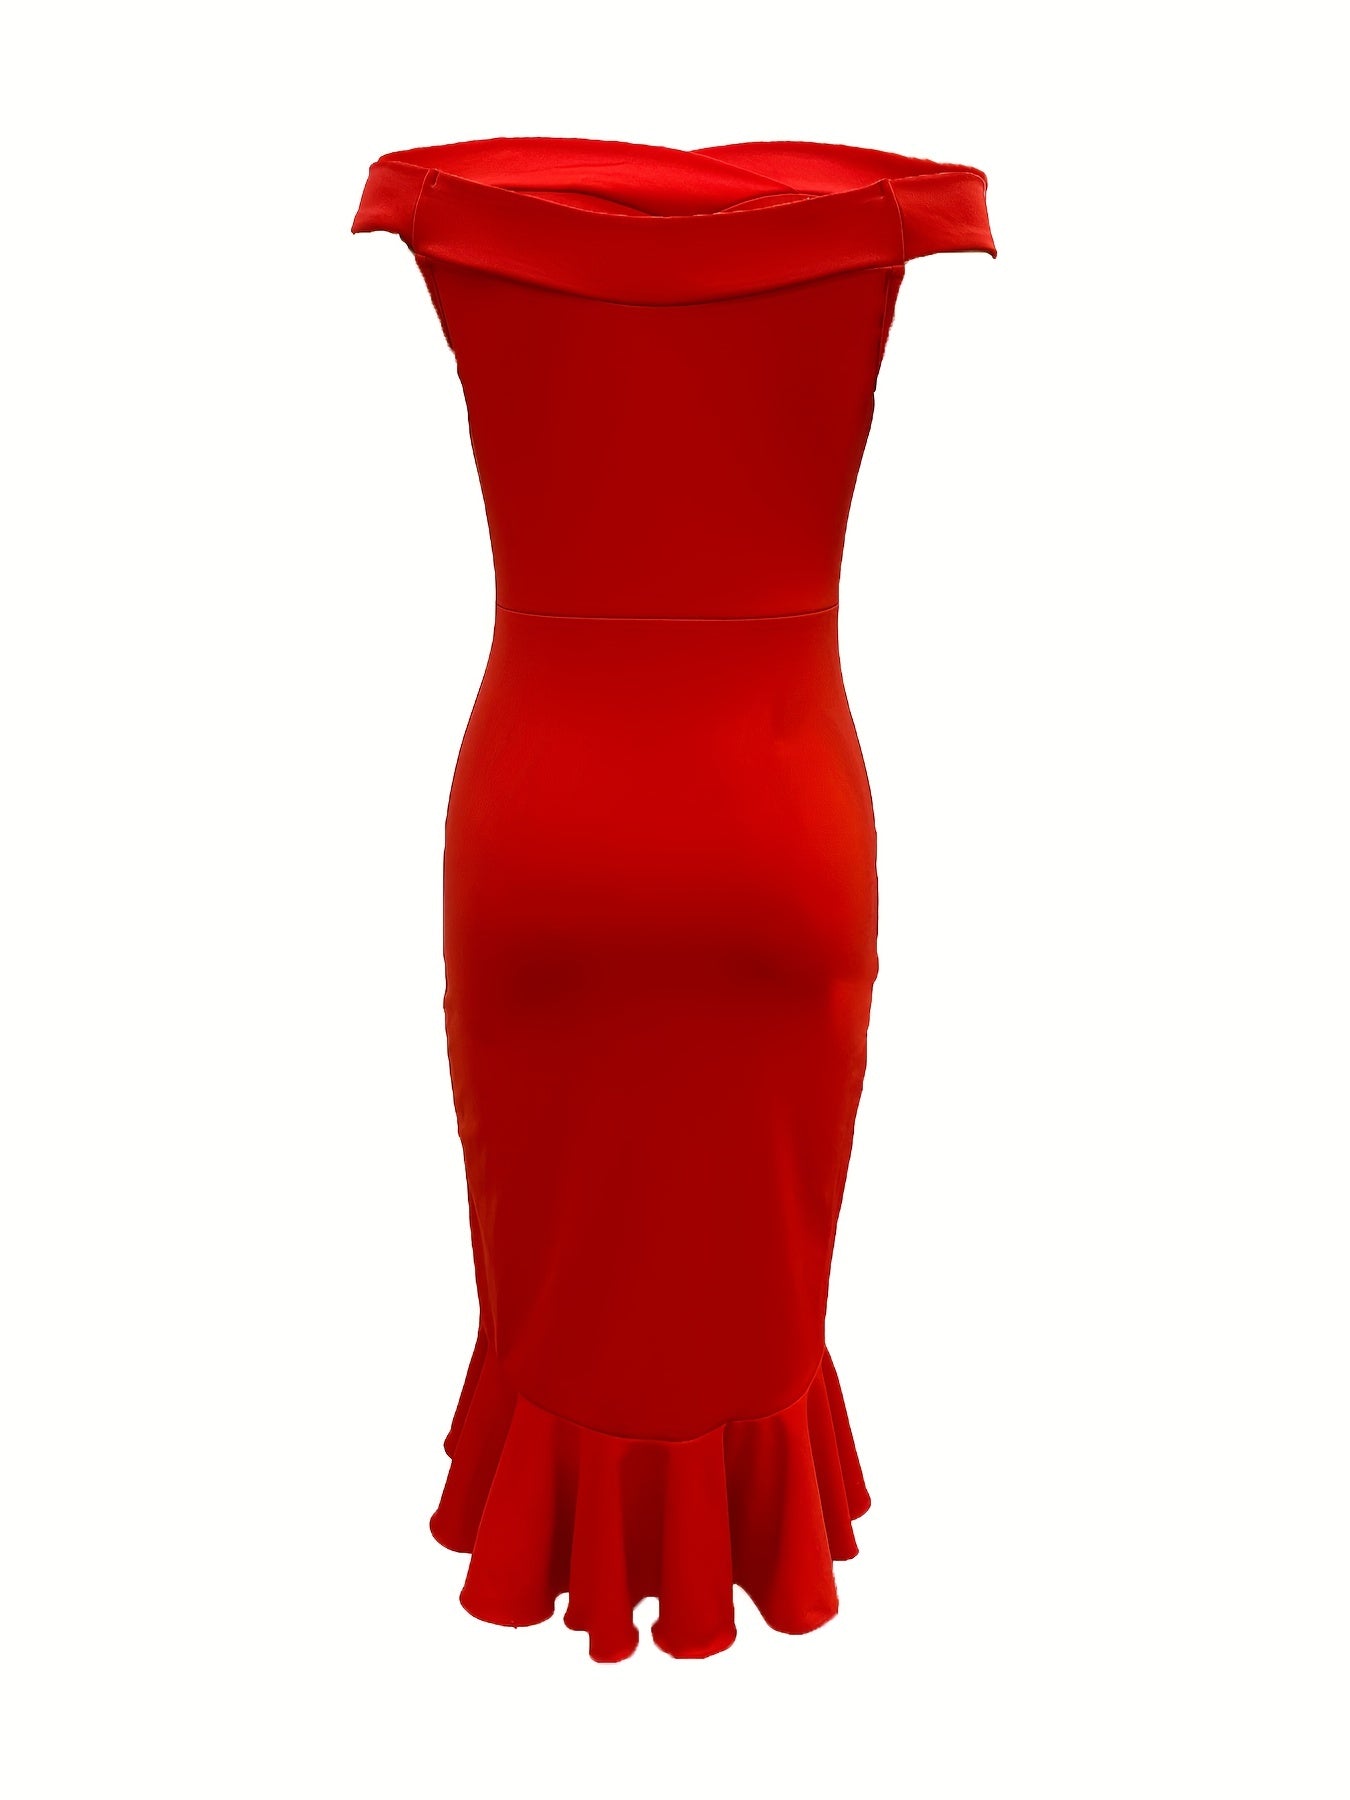 Antmvs Ruffle Hem Solid Dress, Elegant Off Shoulder Bodycon Asymmetrical Party Dress, Women's Clothing